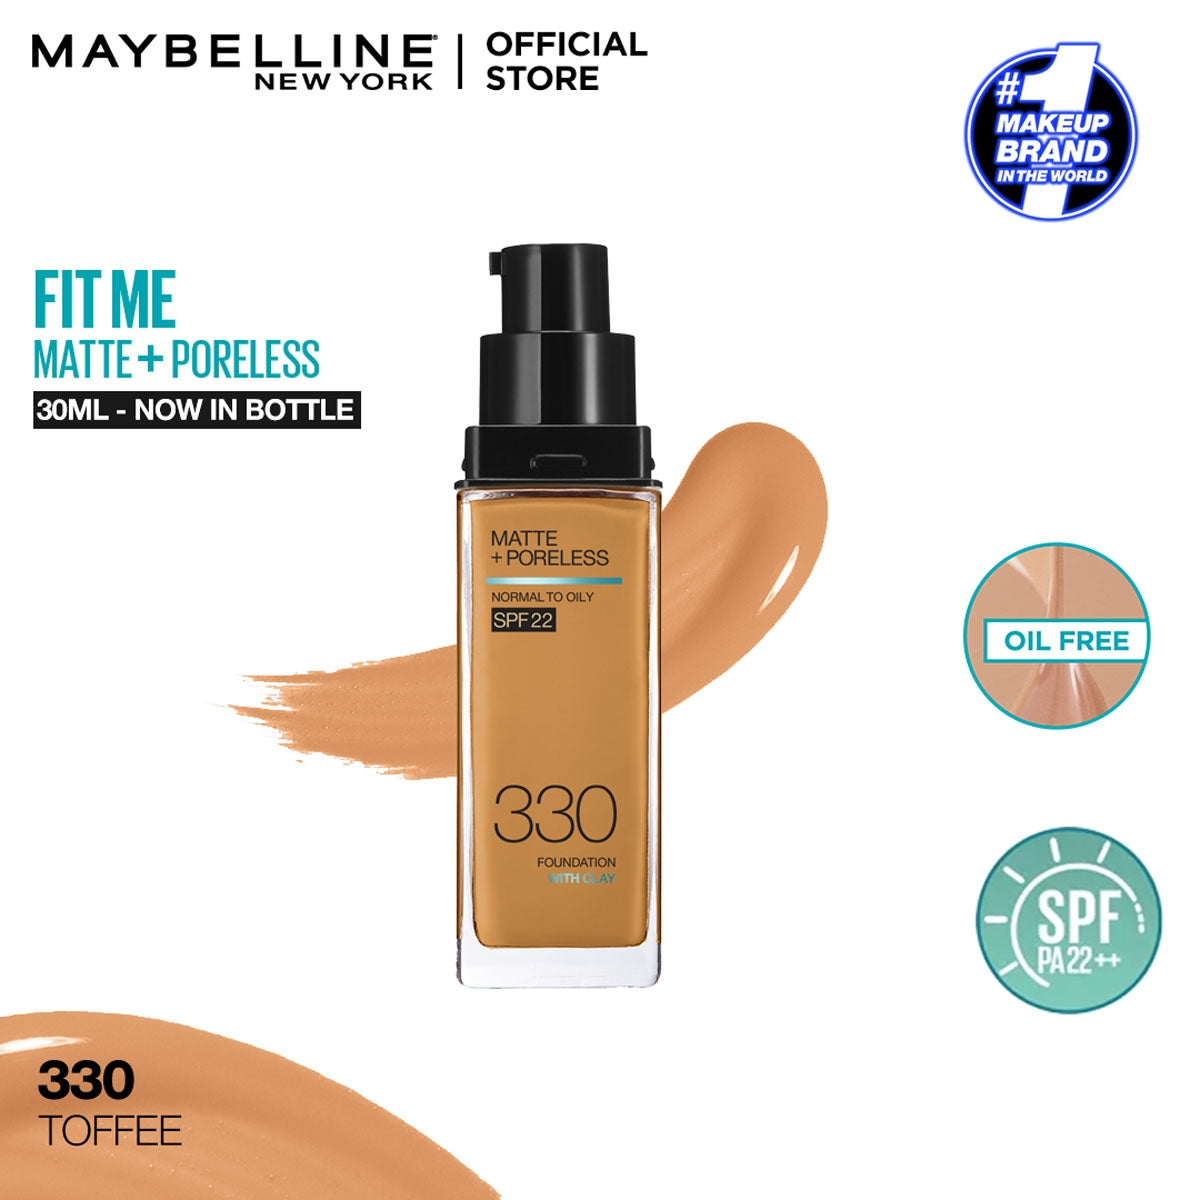 Foundation - 22 Me Matte - Poreless + Pakistan SPF City Makeup Fit Liquid To – Maybelline 330